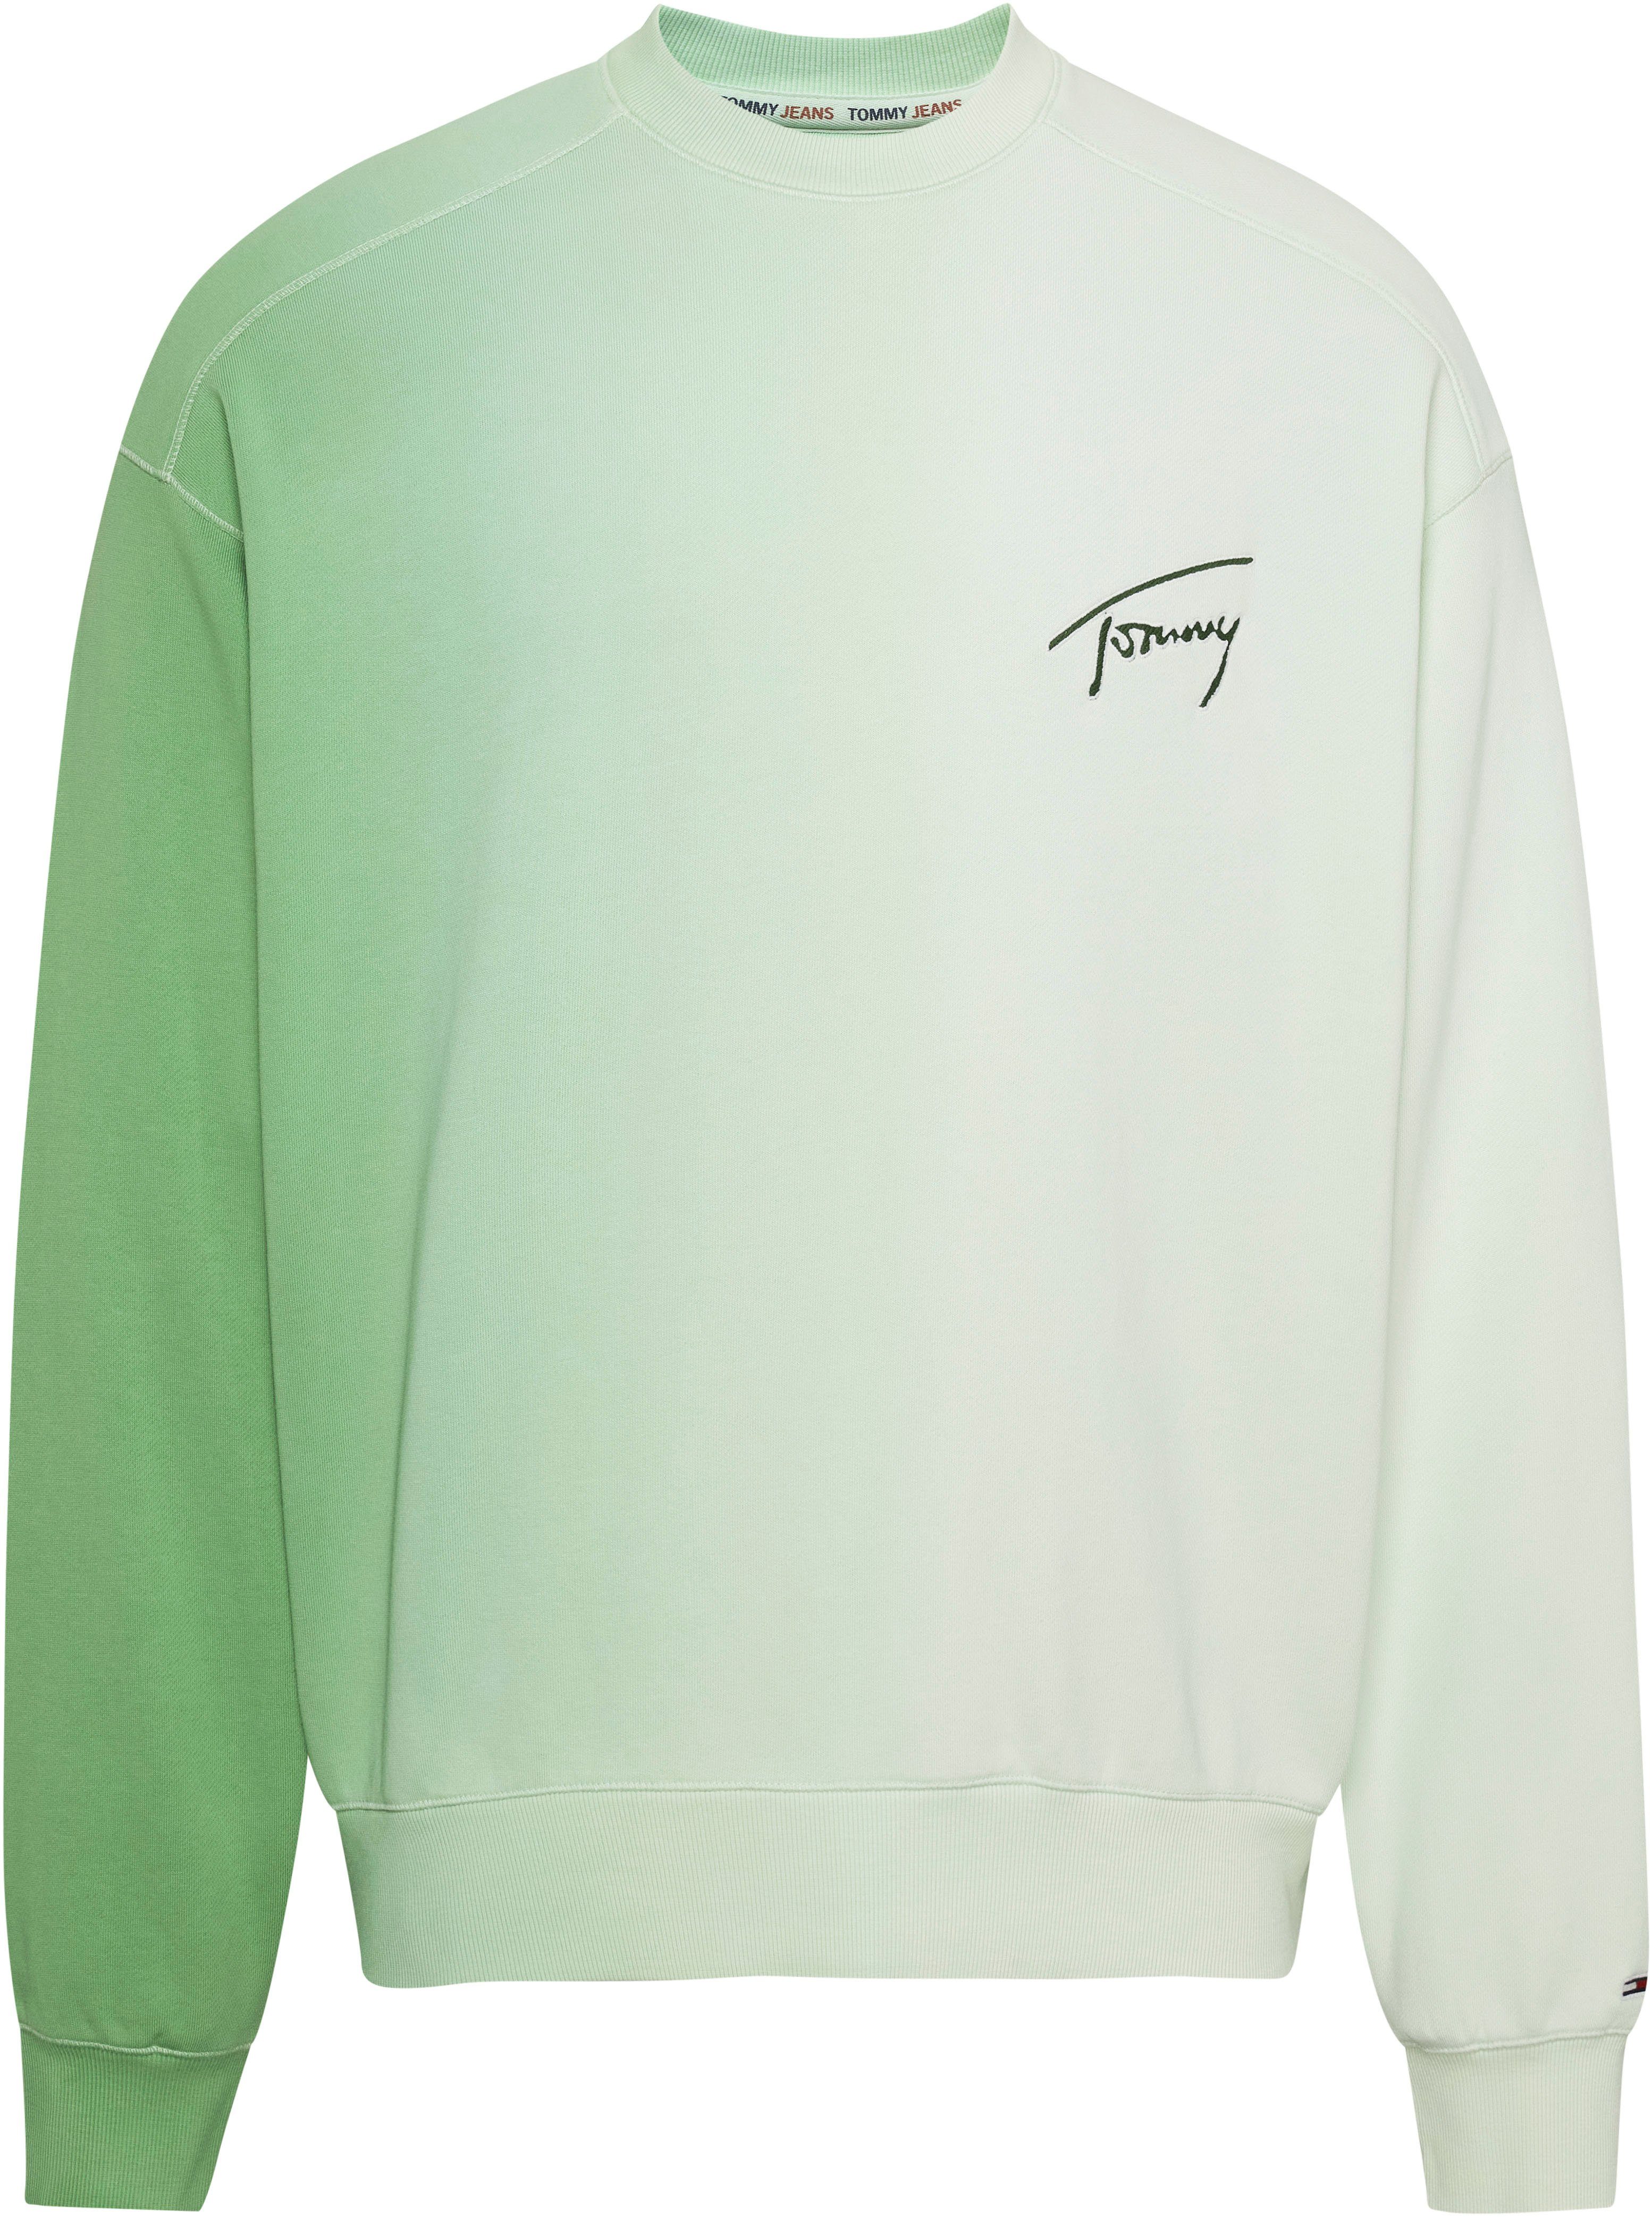 DIP Dip Tommy TJM Jeans Dye Sweatshirt CREW SIGNATURE BOXY Optik DYE in CoastalGreen/Multi